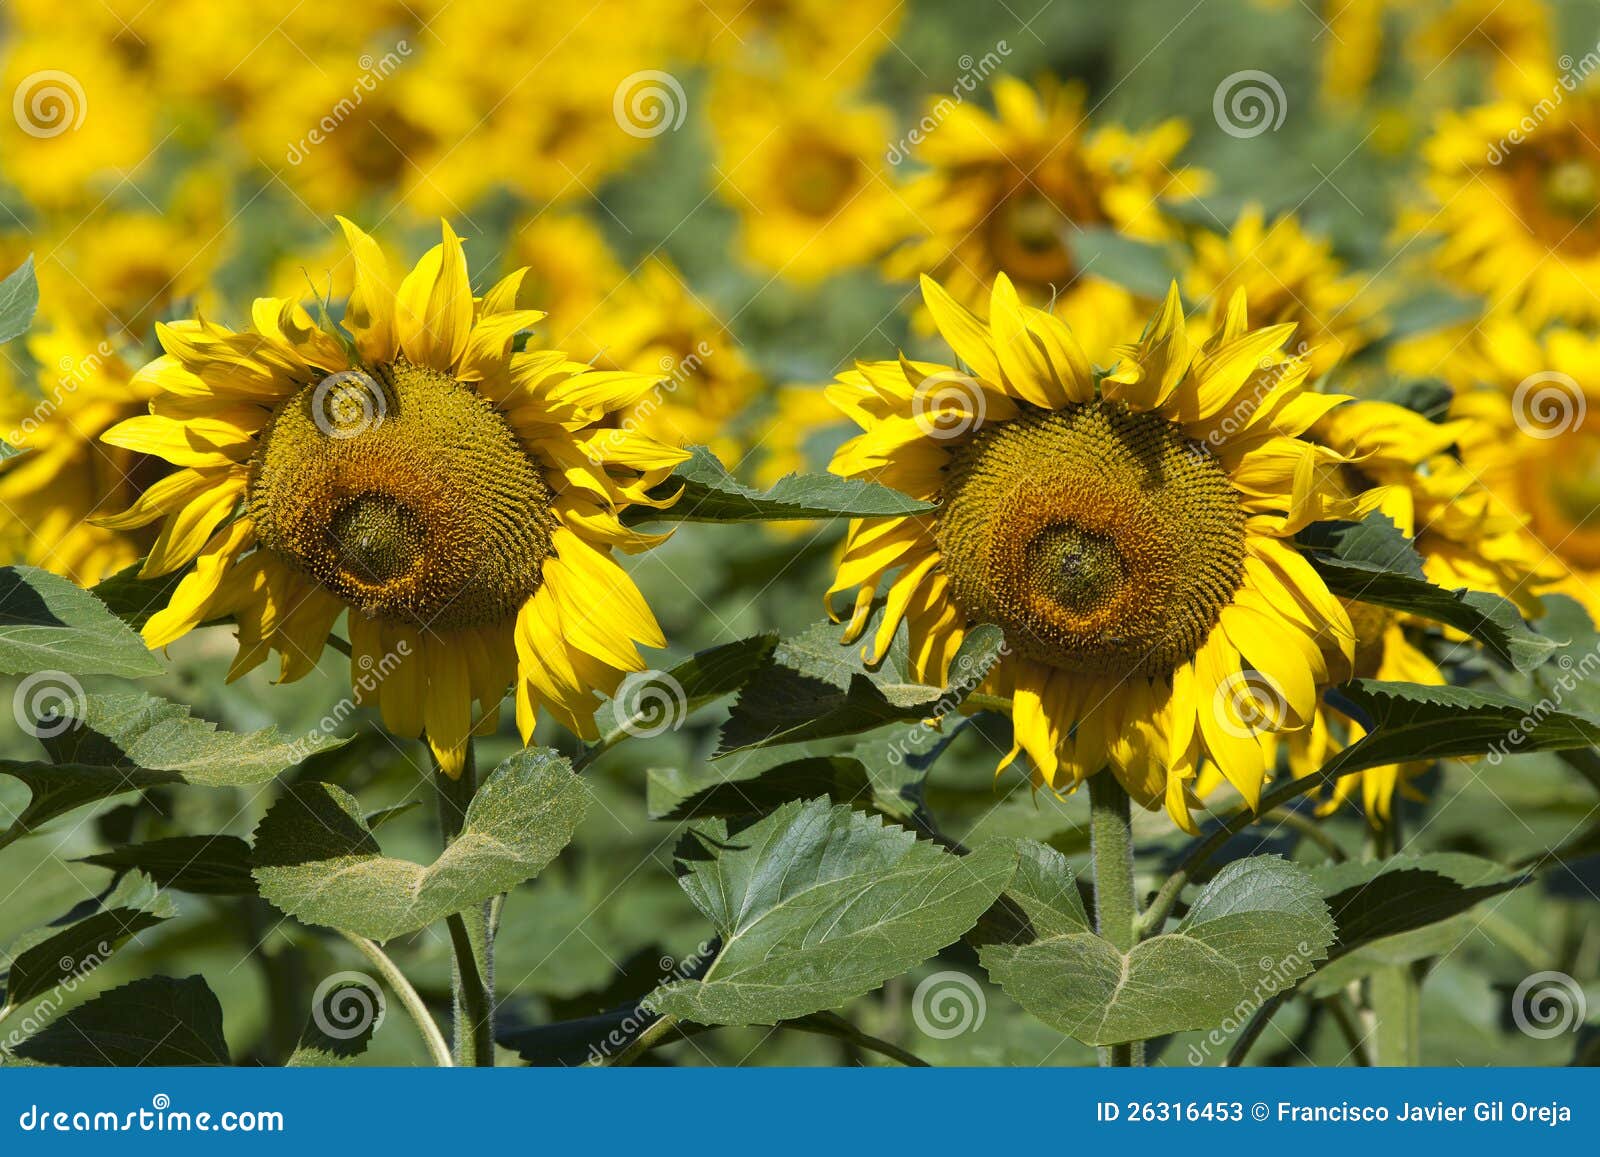 sunflowers, villarcayo